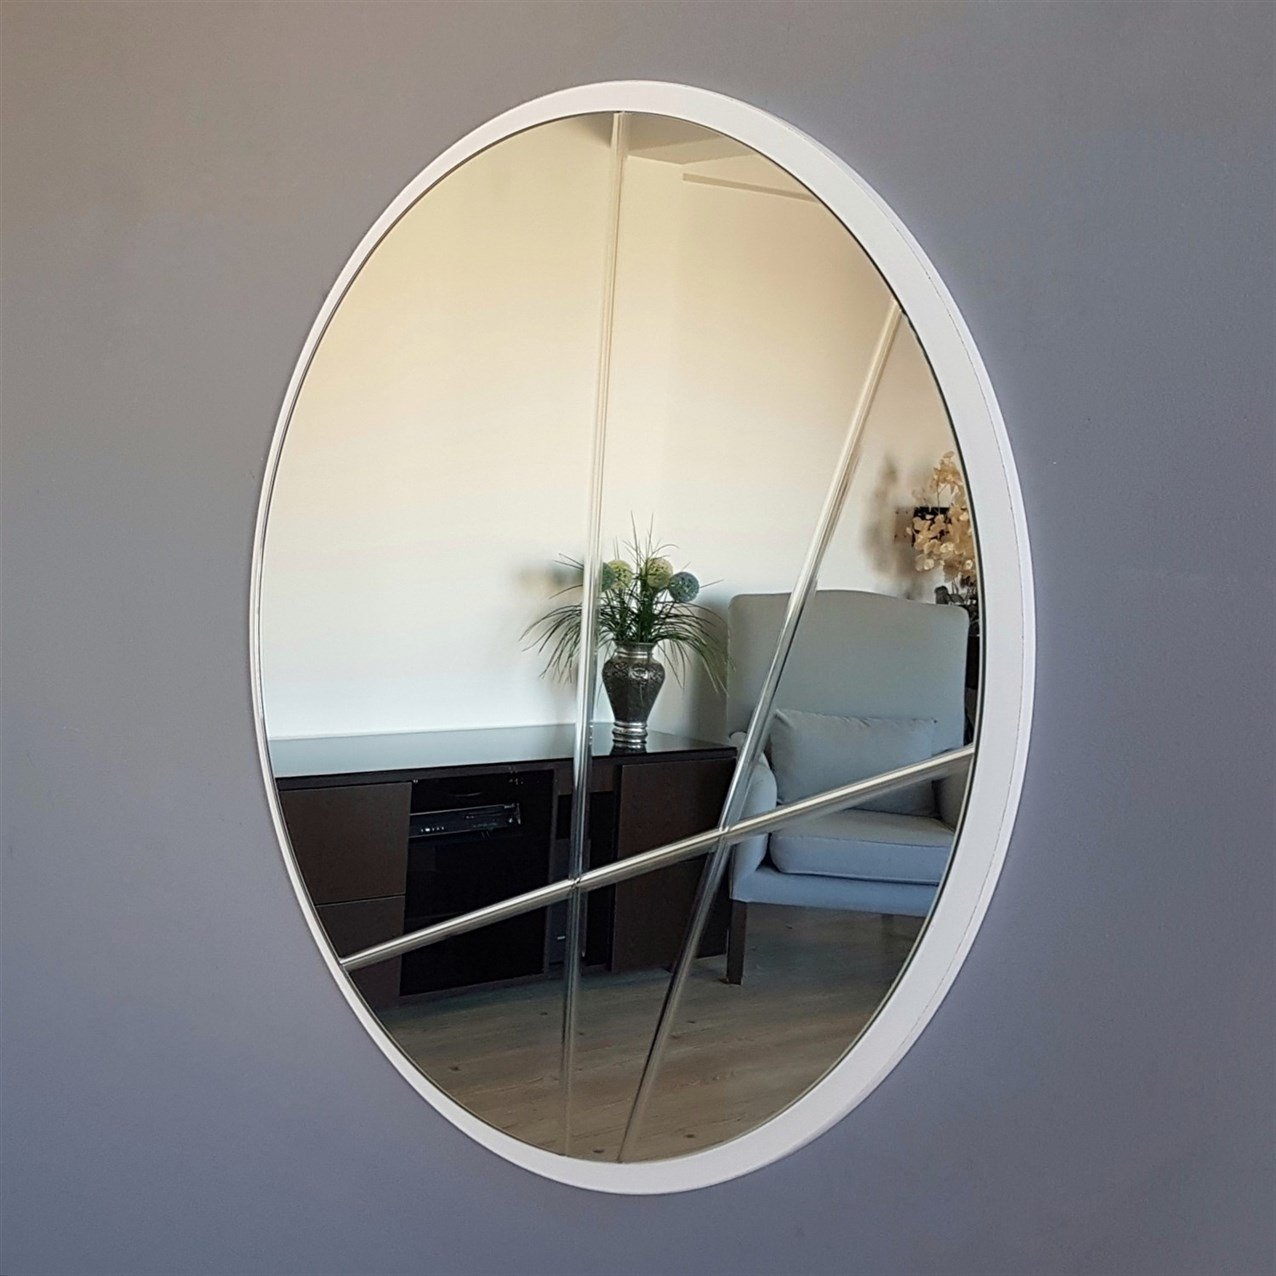 NEOstill - Modern Desen Ayna 60 cm A704